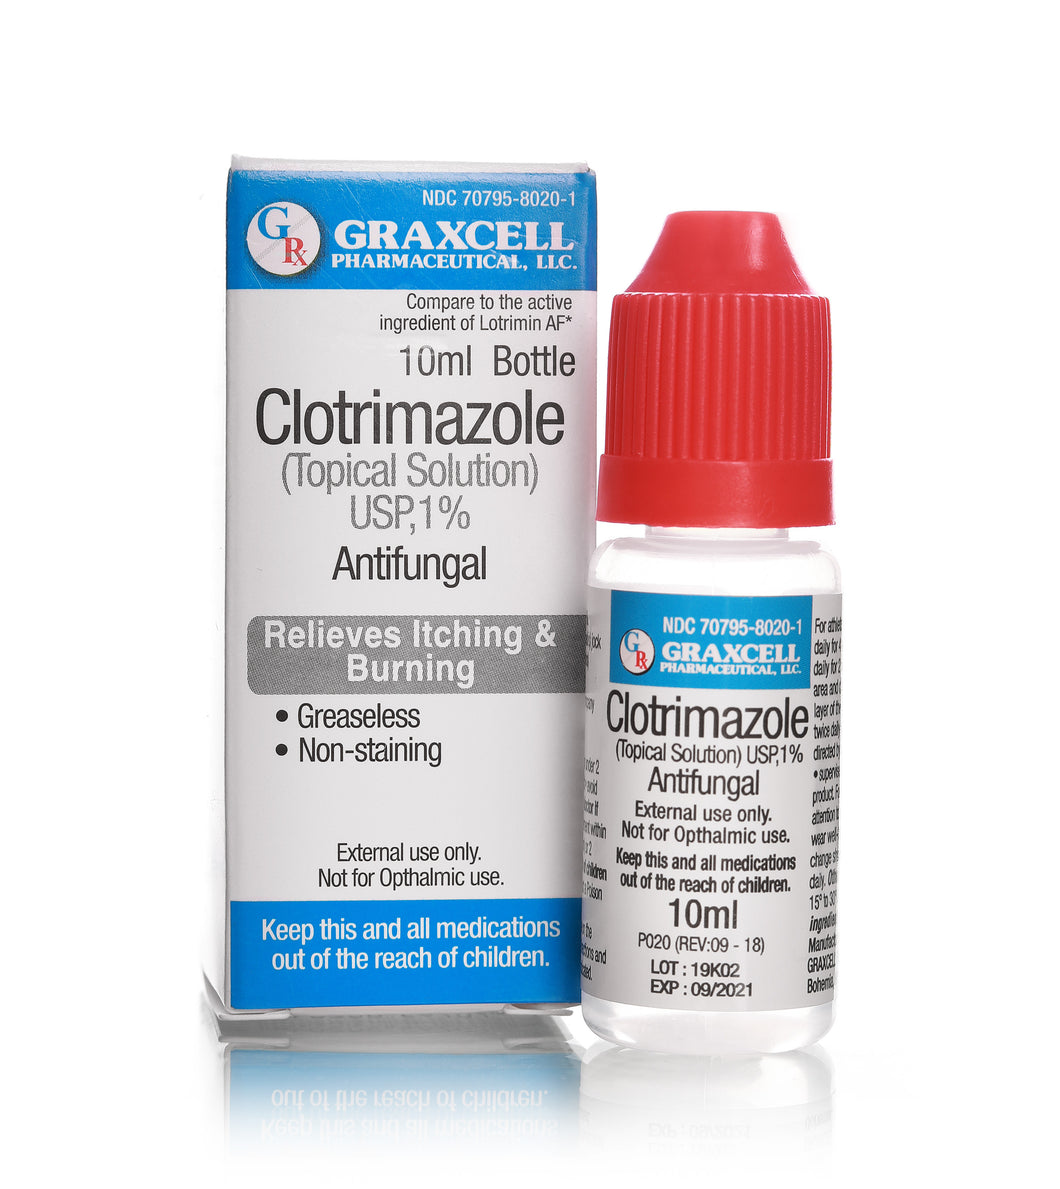 Clotrimazole 1% | ( Generic Lotrimin Solution ) | Antifungal Topical Solution | 10ml Bottle